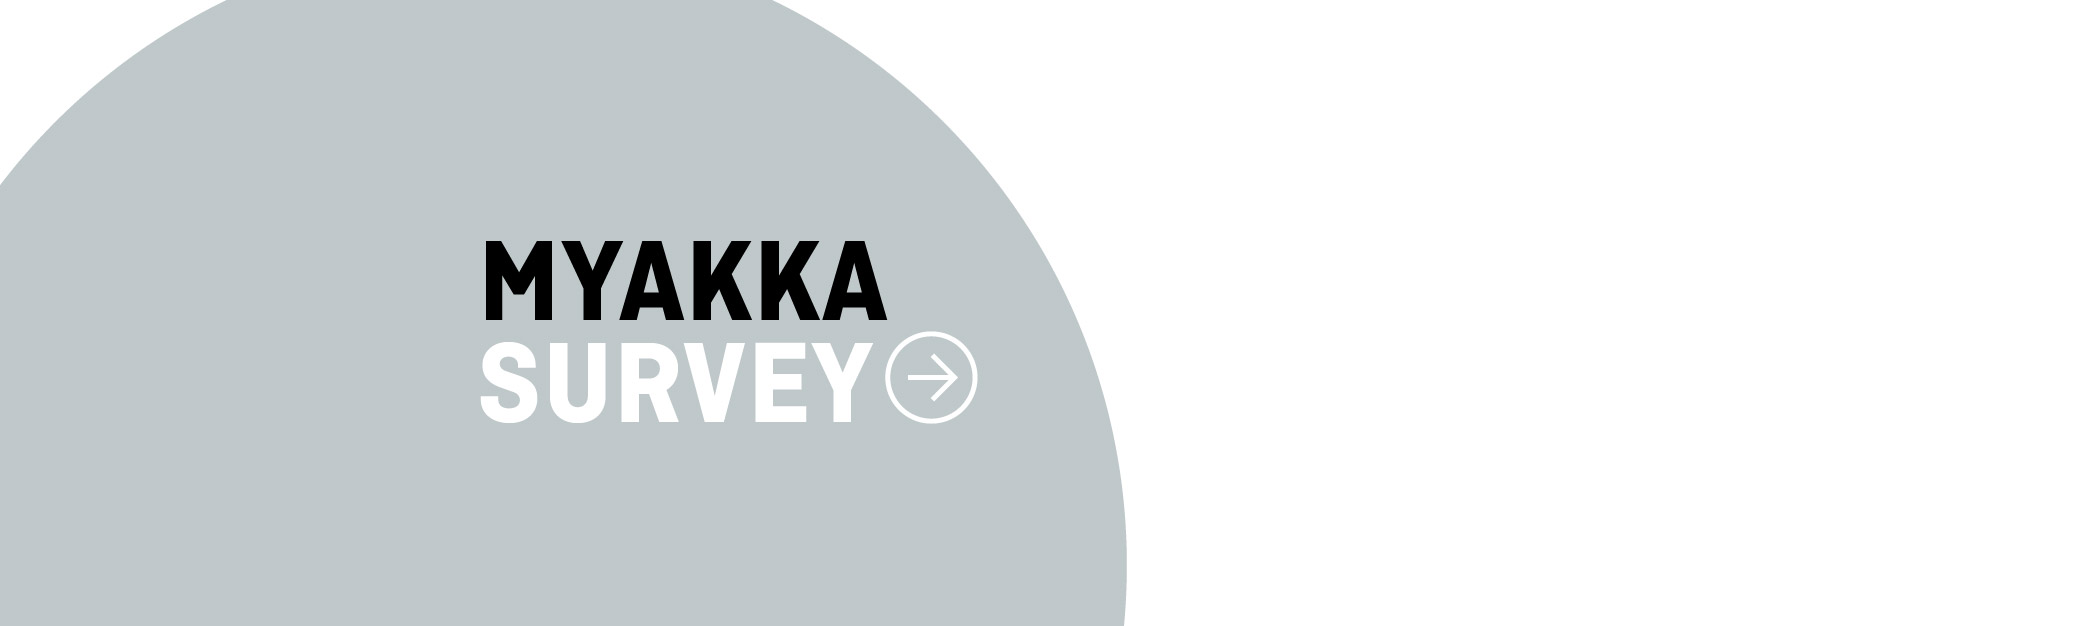 Myakka Survey